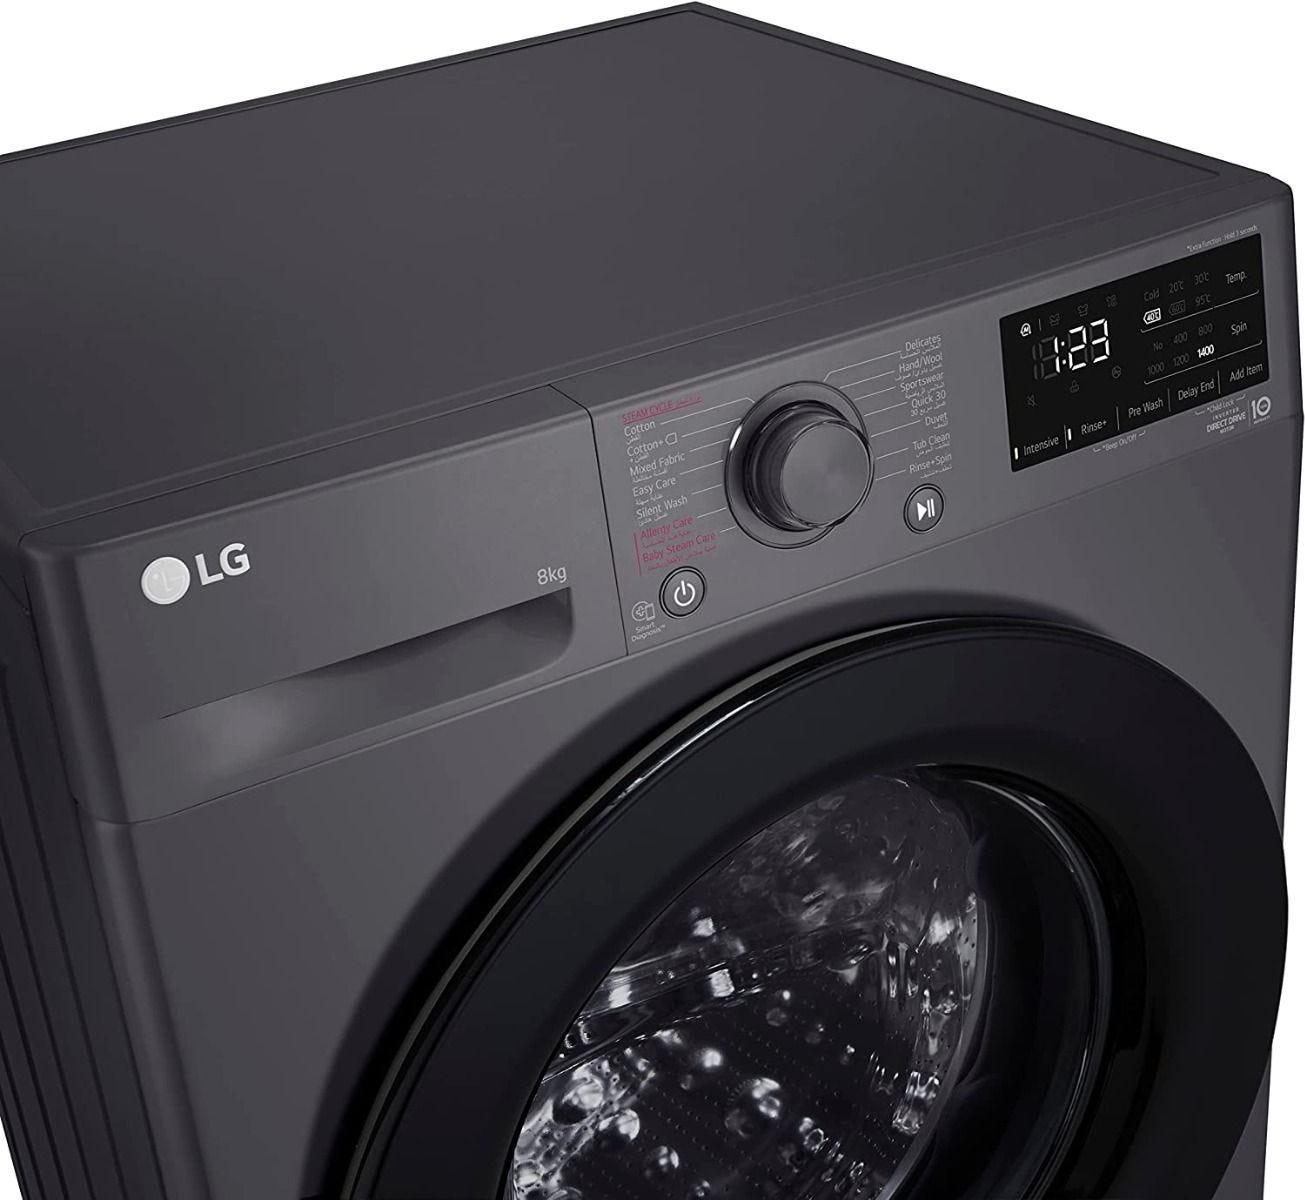 LG Vivace Digital Front Load Full Automatic Washing Machine with AI DD Technology, 8 Kg, Black - F4R3TYG6J